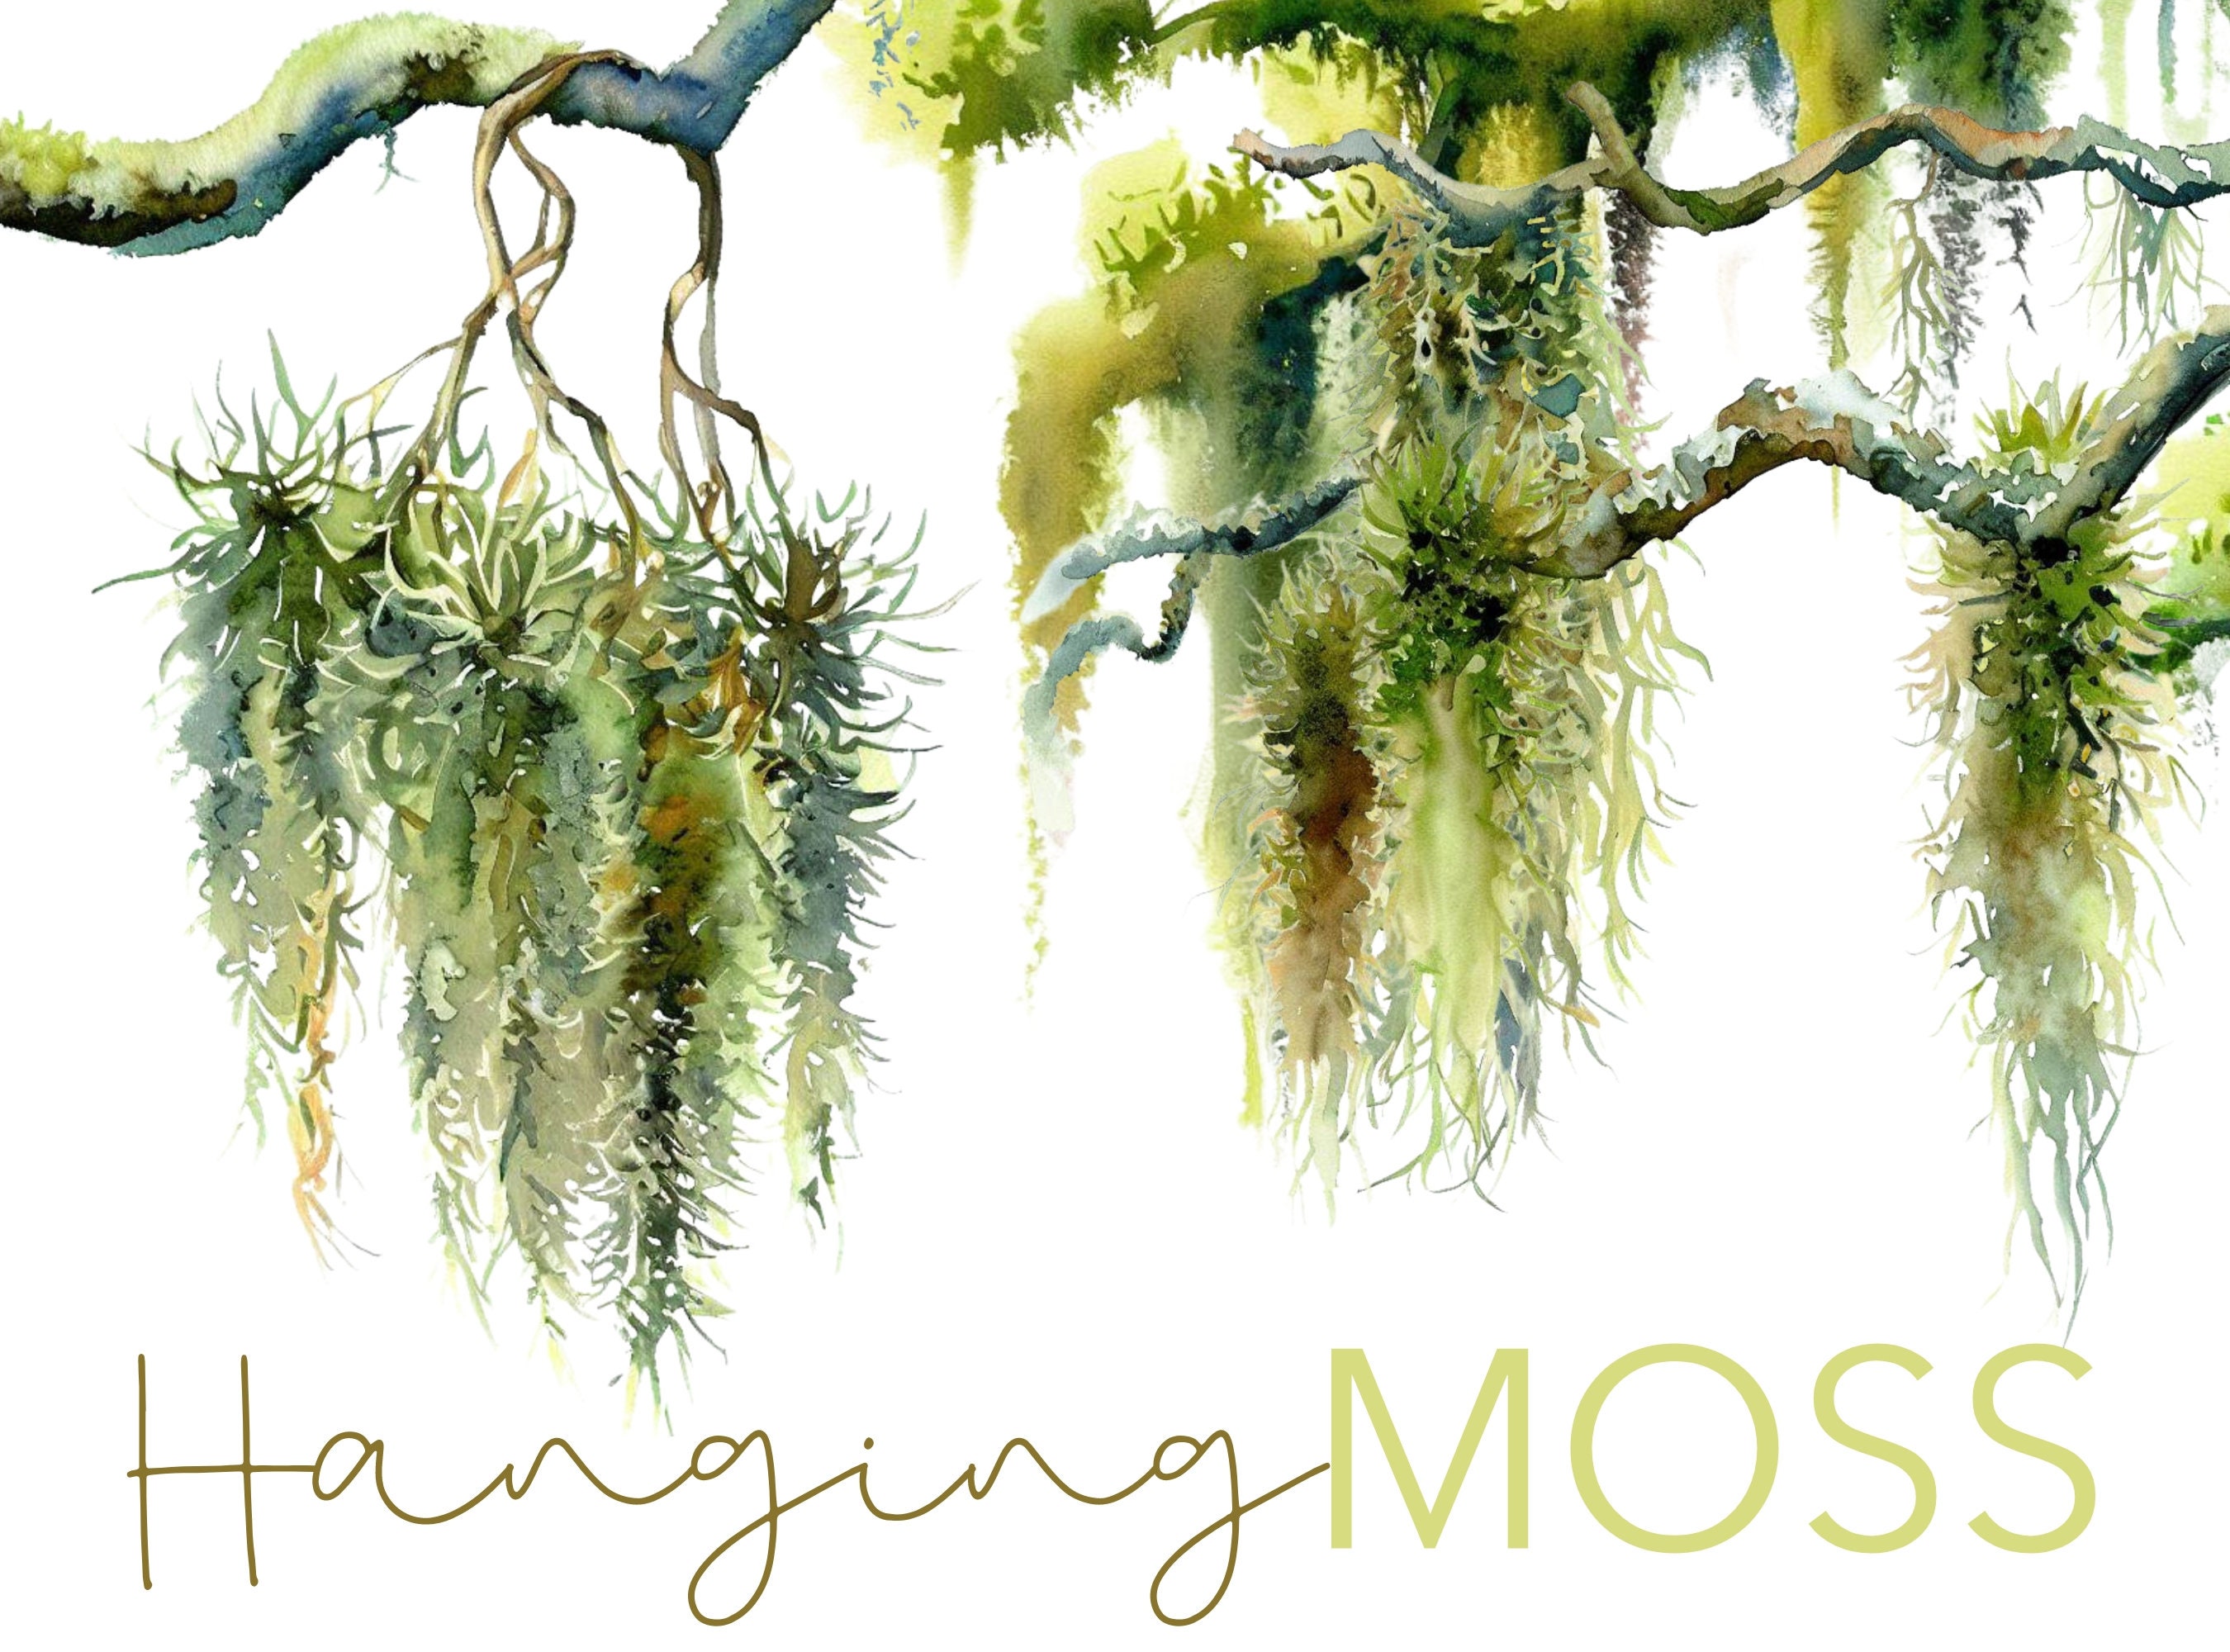 Spanish Moss Hanging Bush 